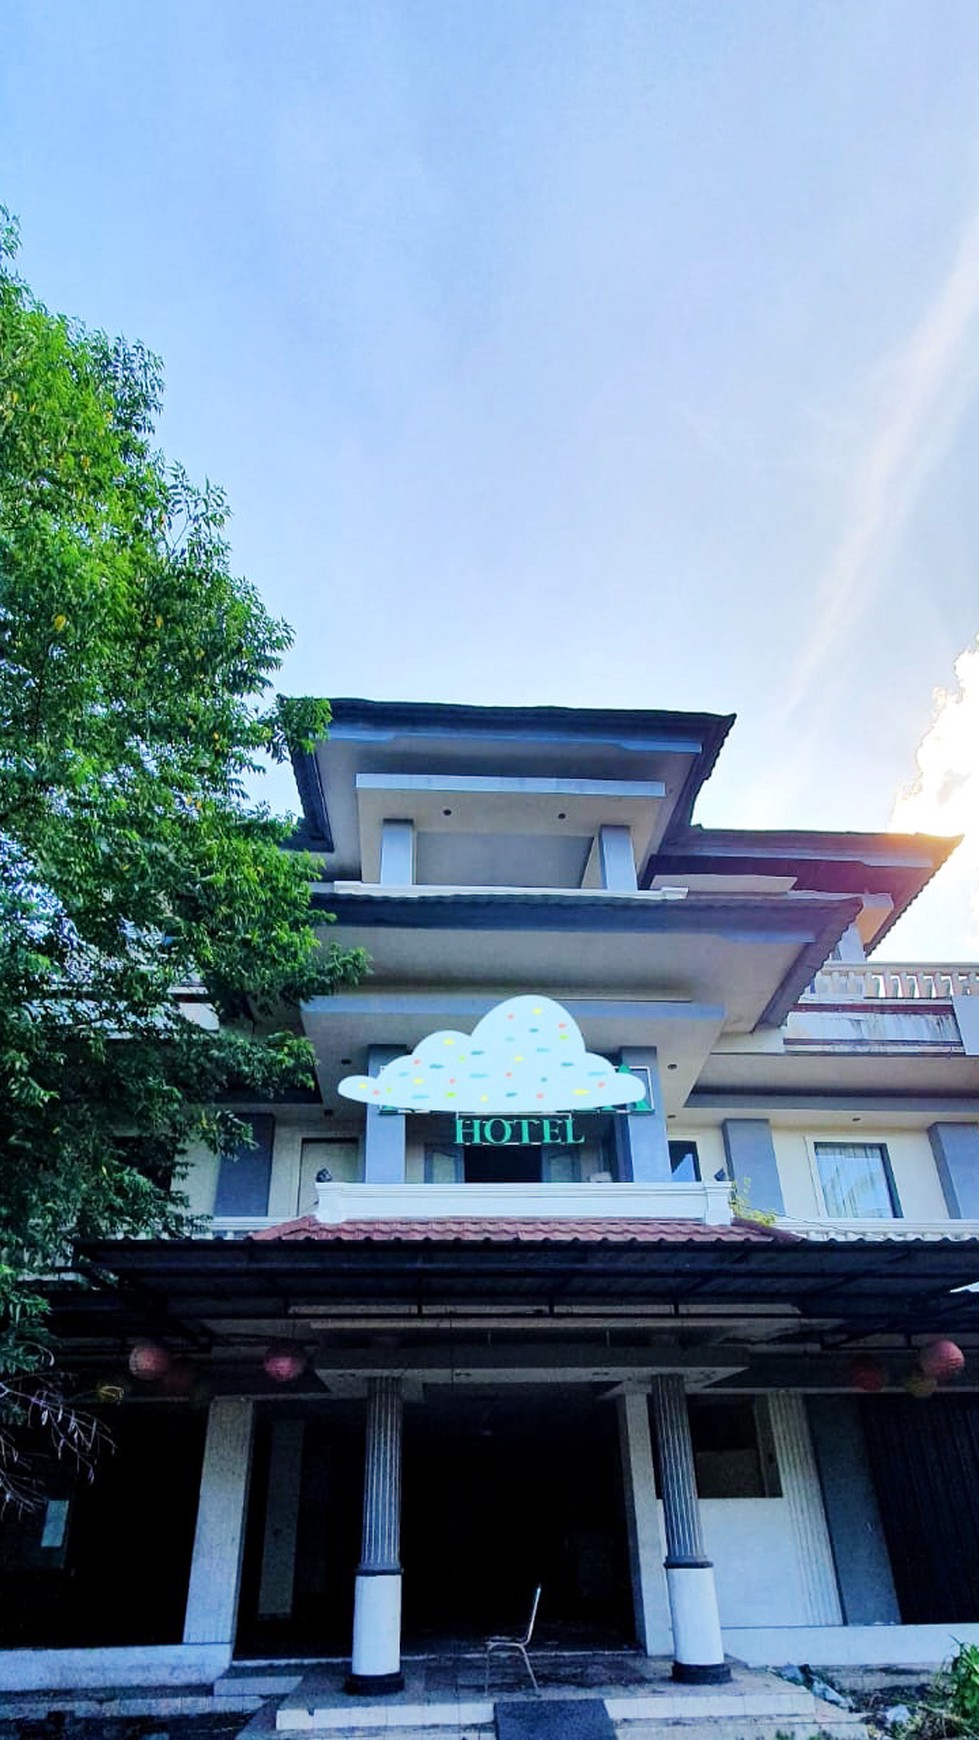 Gedung Ex Hotel Di Jl Raya Kuta Bali